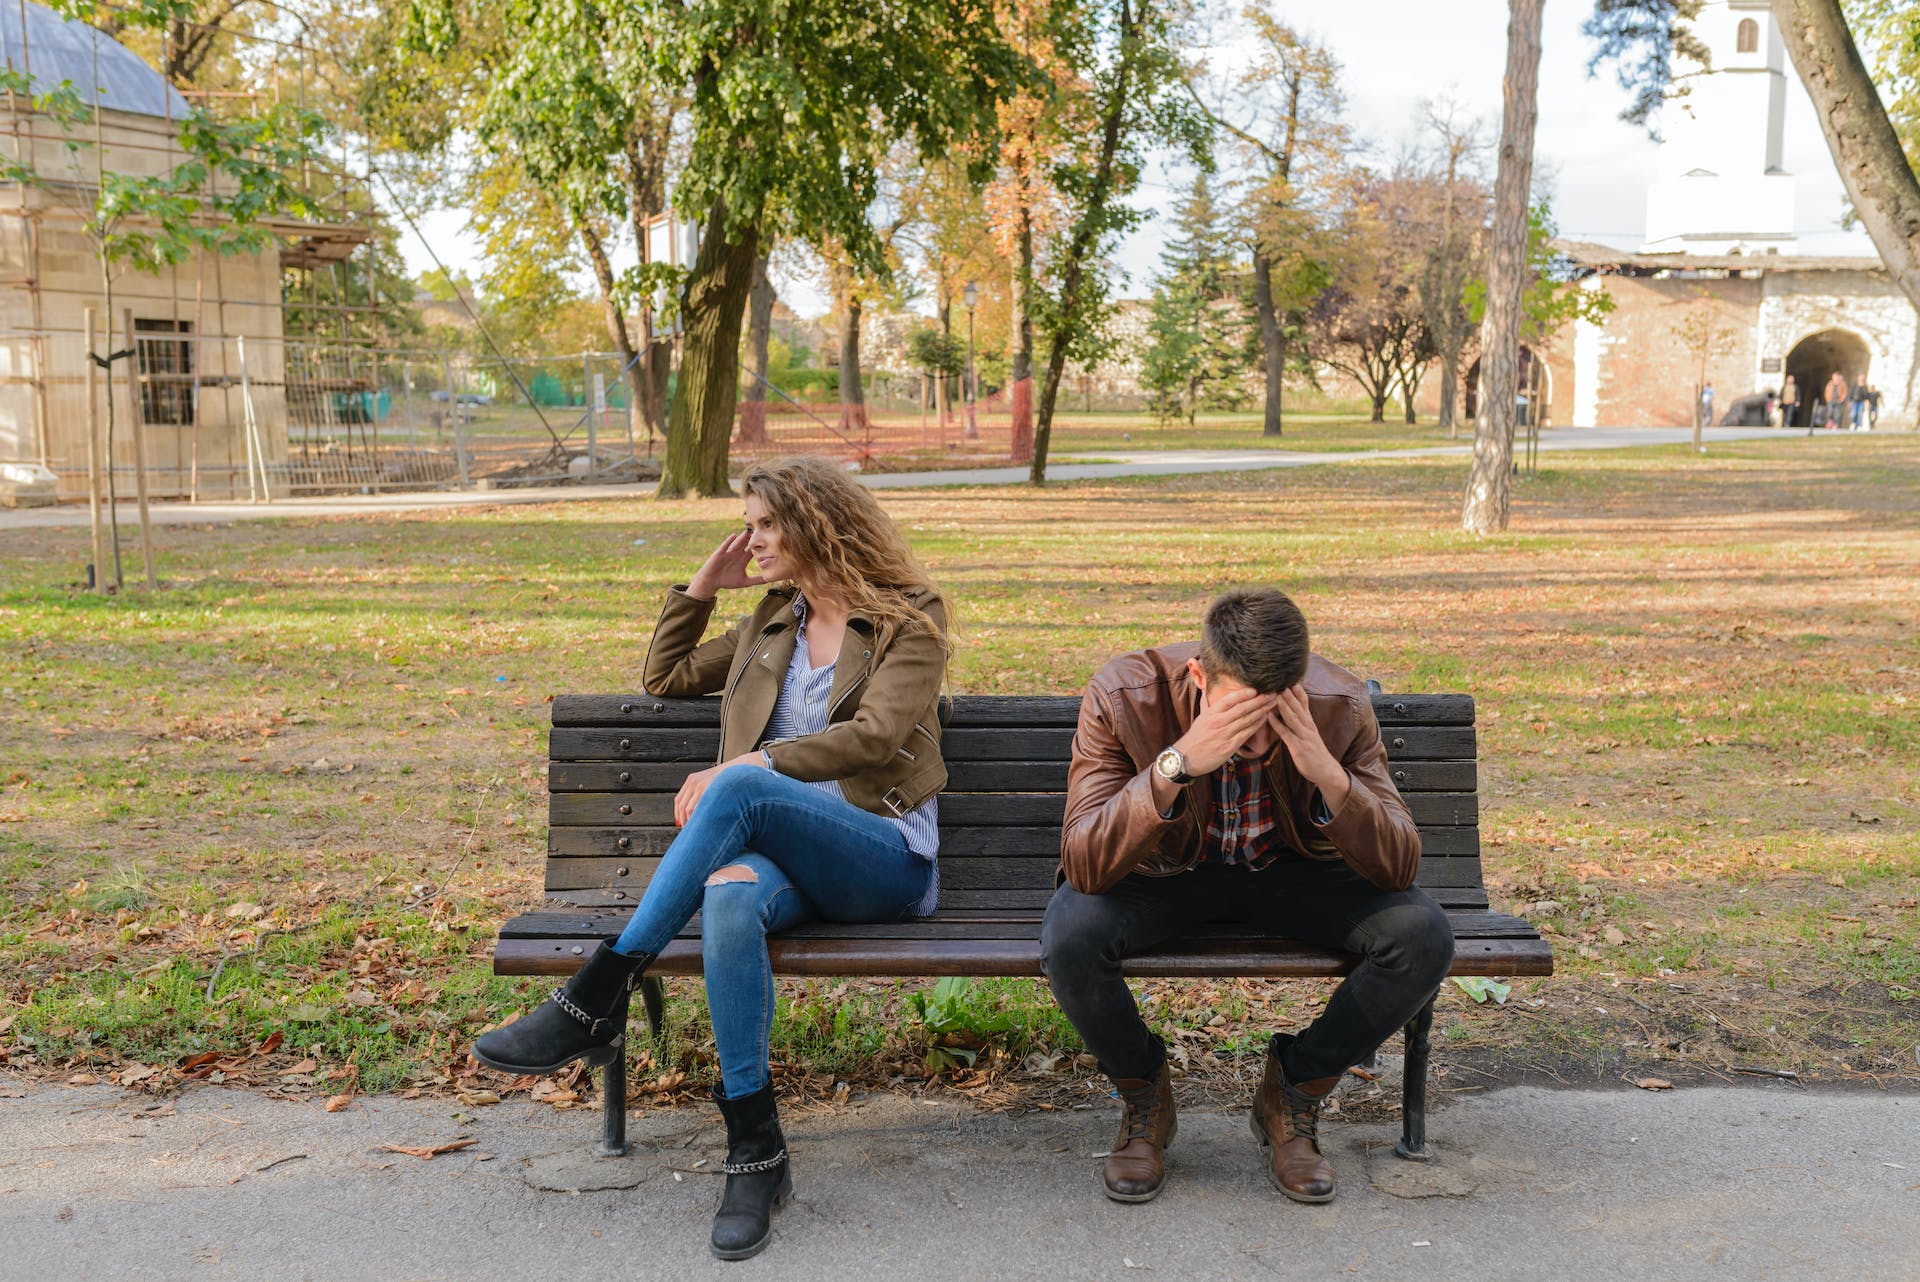 Couple sitting apart after an argument | Source: Pexels